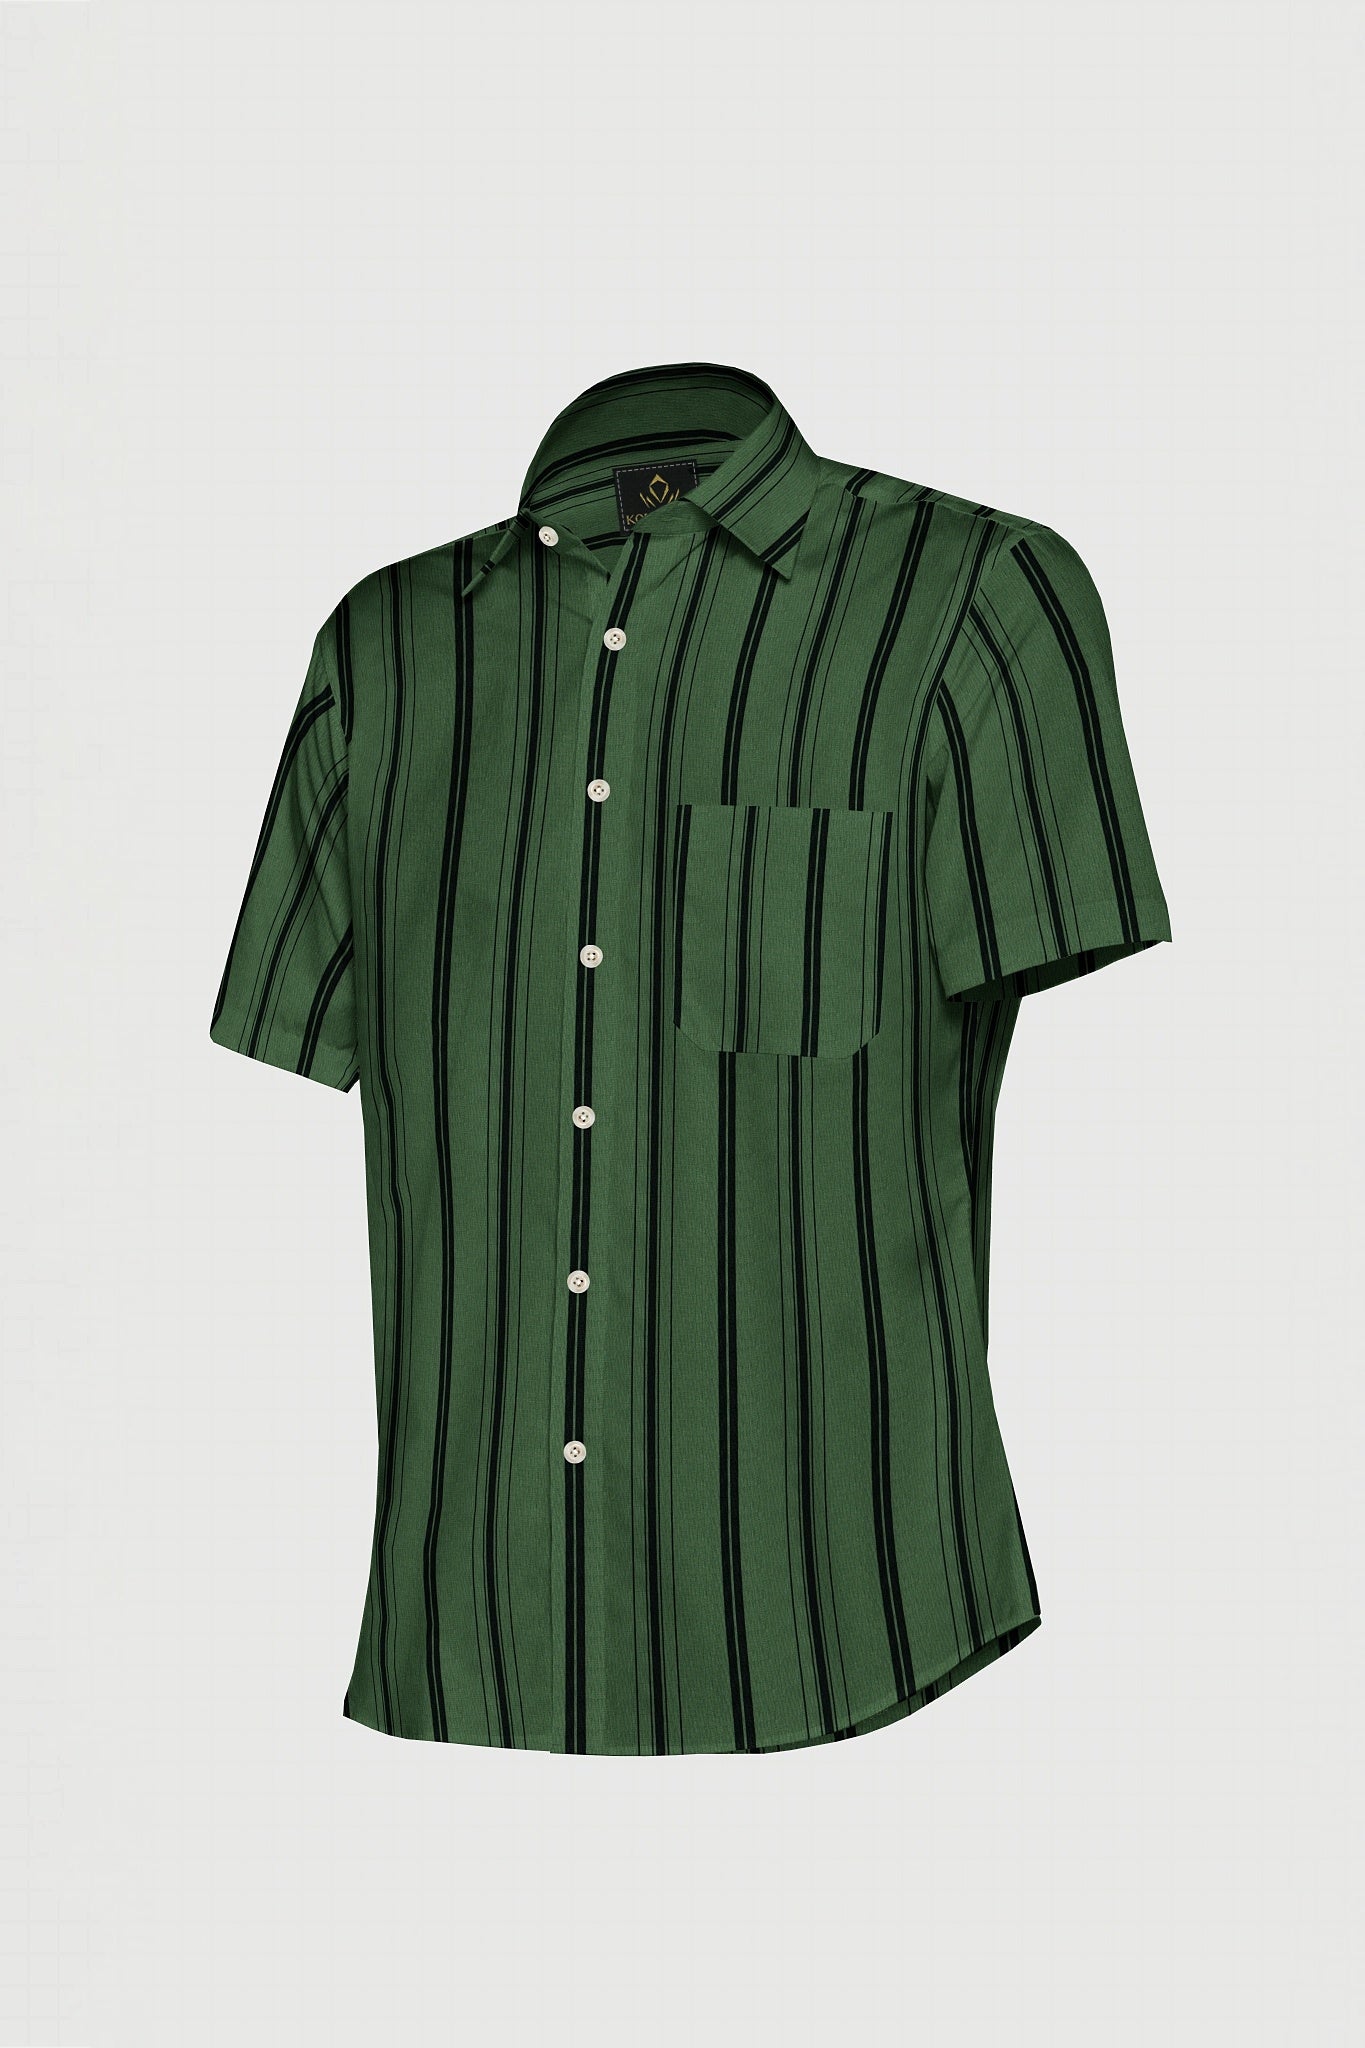 Comfrey Green and Black Stripes Cotton Shirt